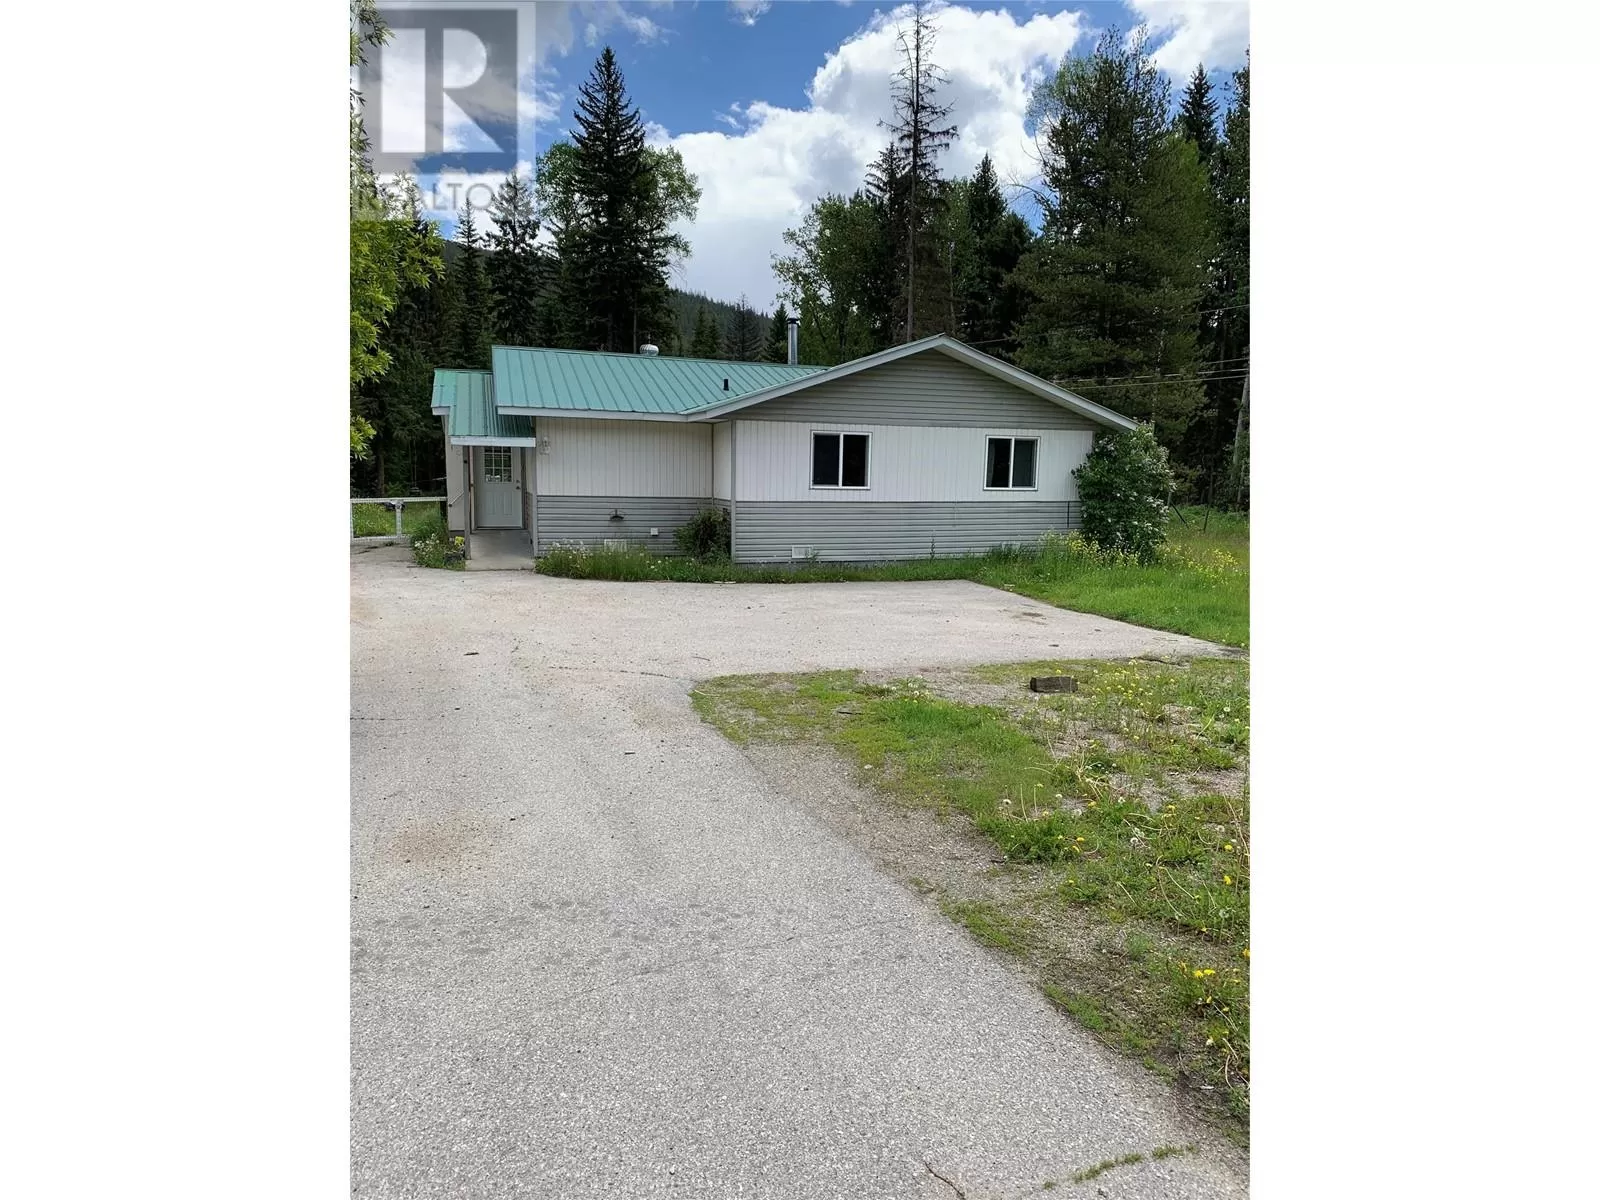 House for rent: 2435 Princeton-summerland Road, Princeton, British Columbia V0X 1W0